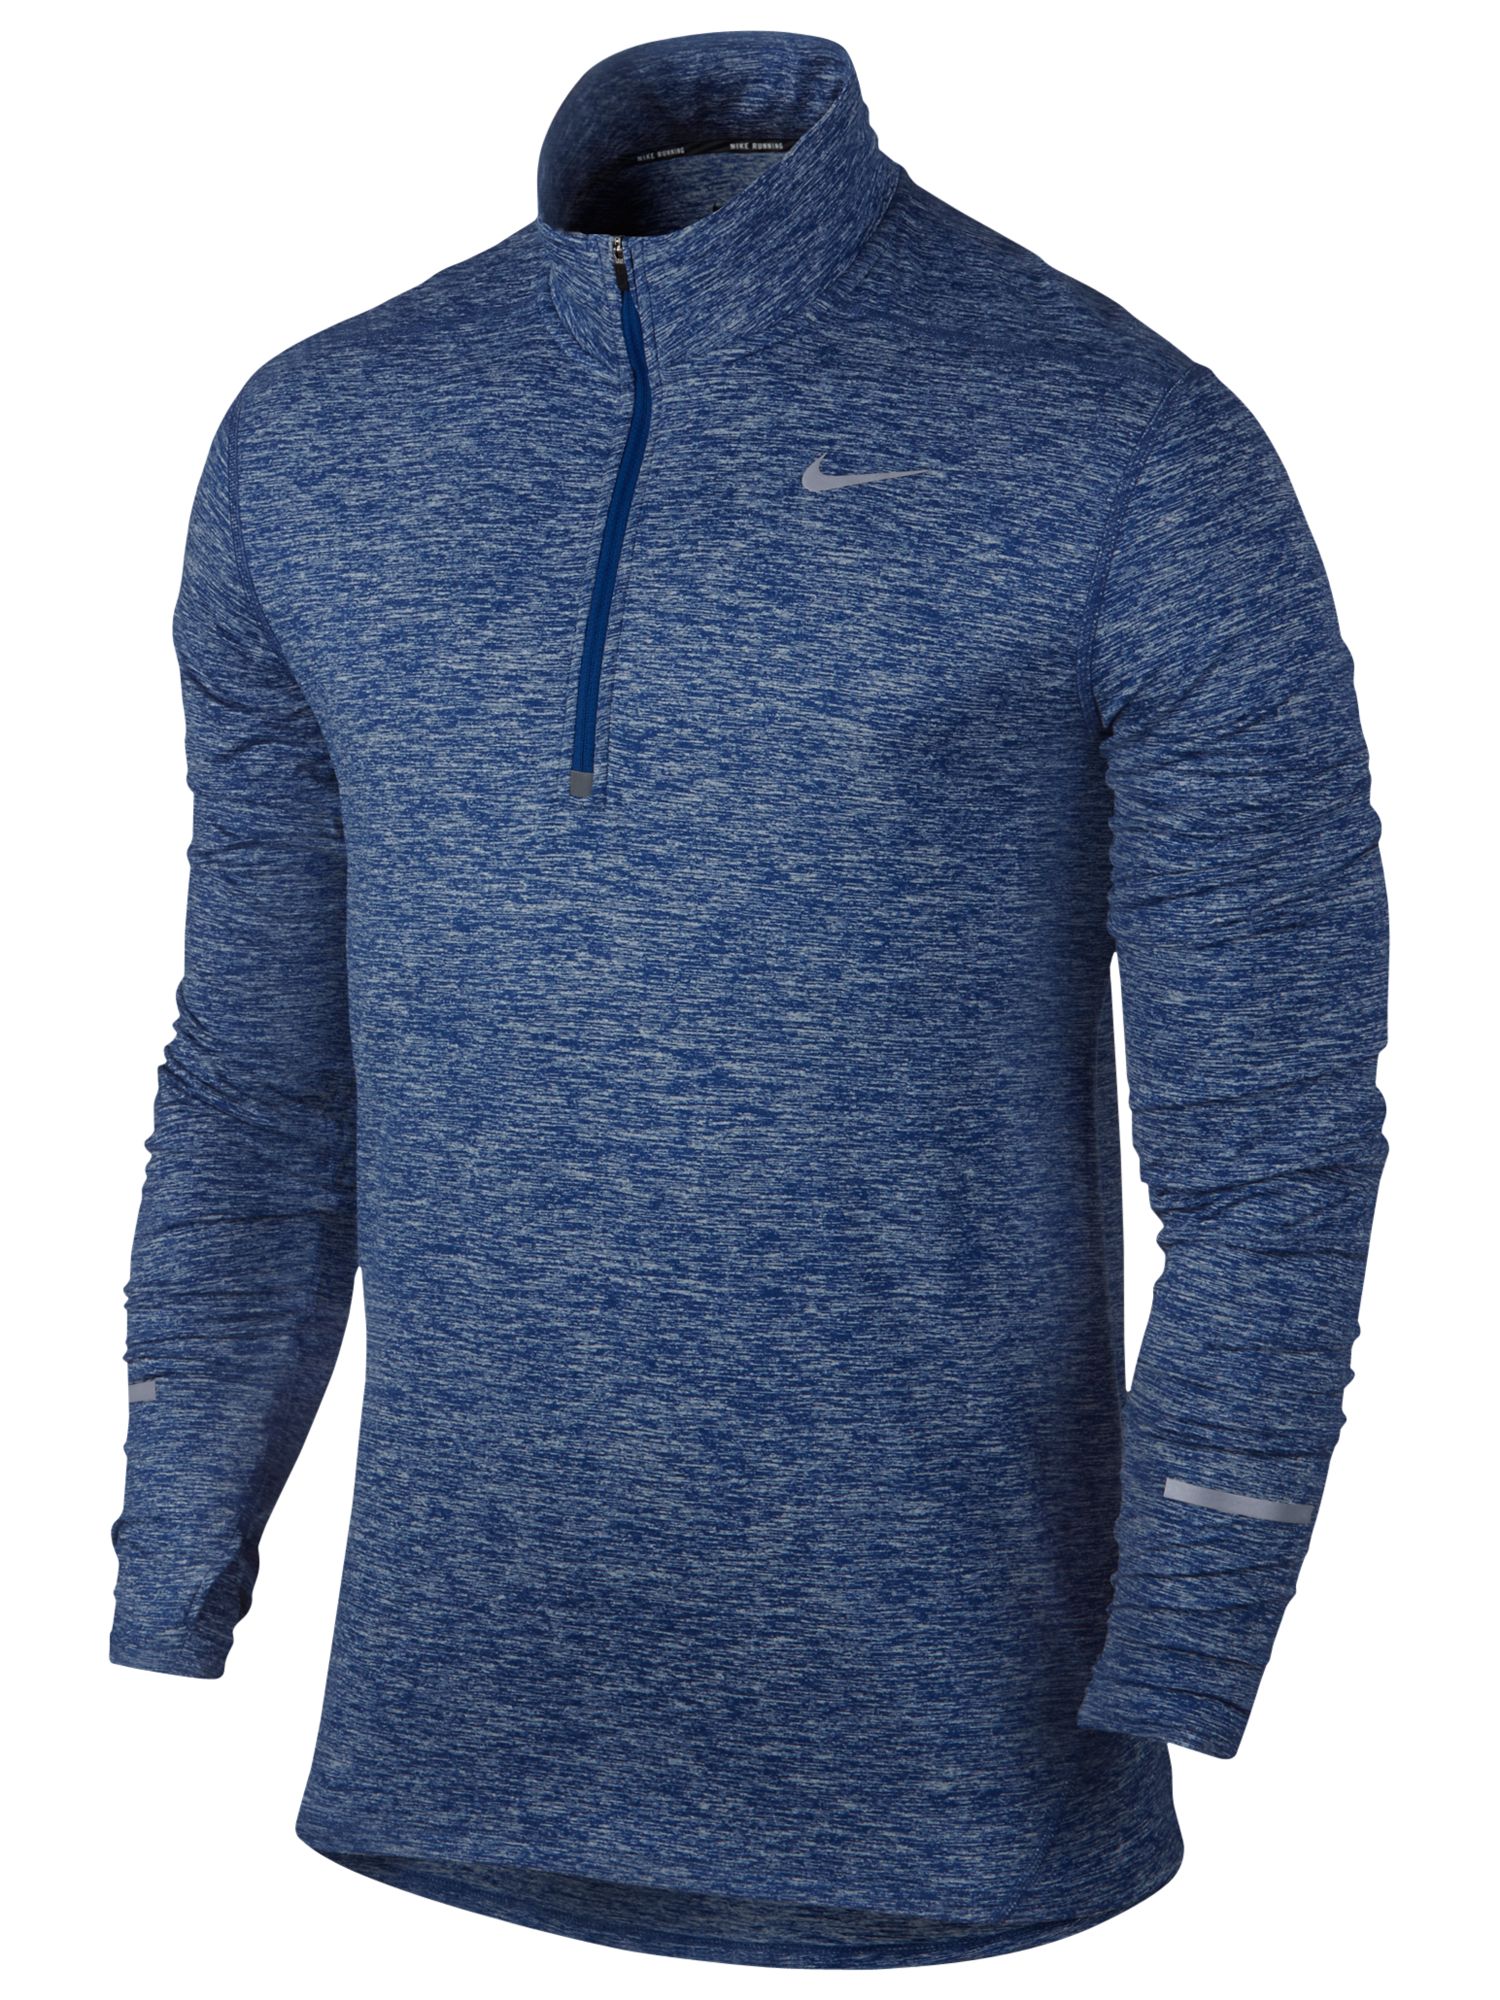 Nike Dri-FIT Element Half-Zip Long Sleeve Running Top, Royal Blue/Reflective Silver at John 